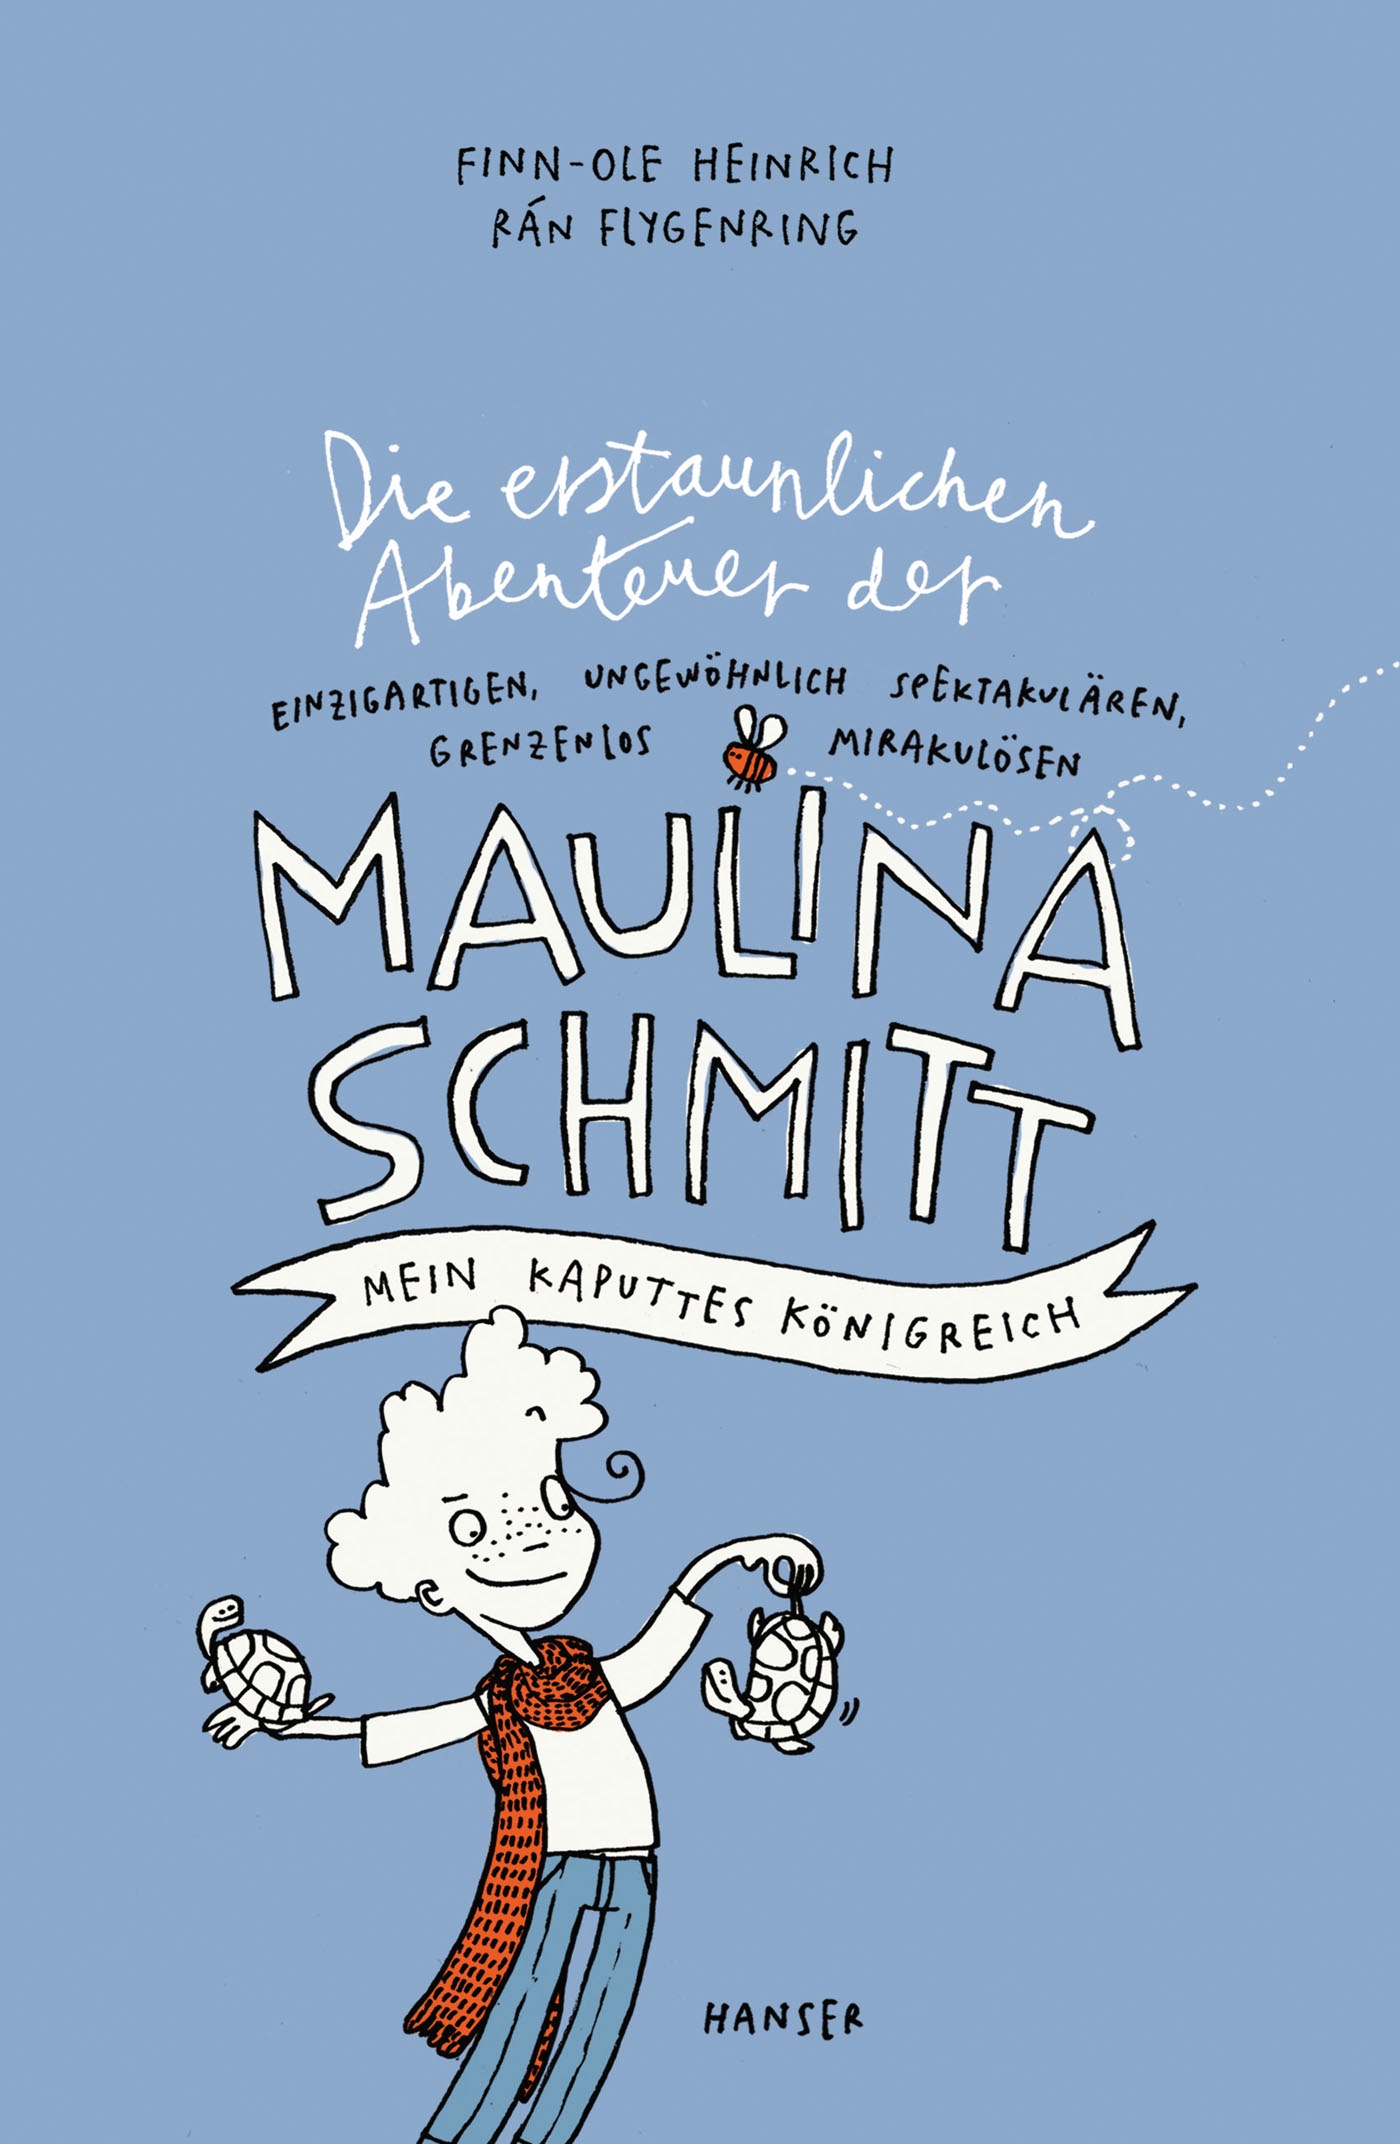 The Amazing and Astonishing Adventures of Maulina Schmitt
Part 1: My Shattered Kingdom